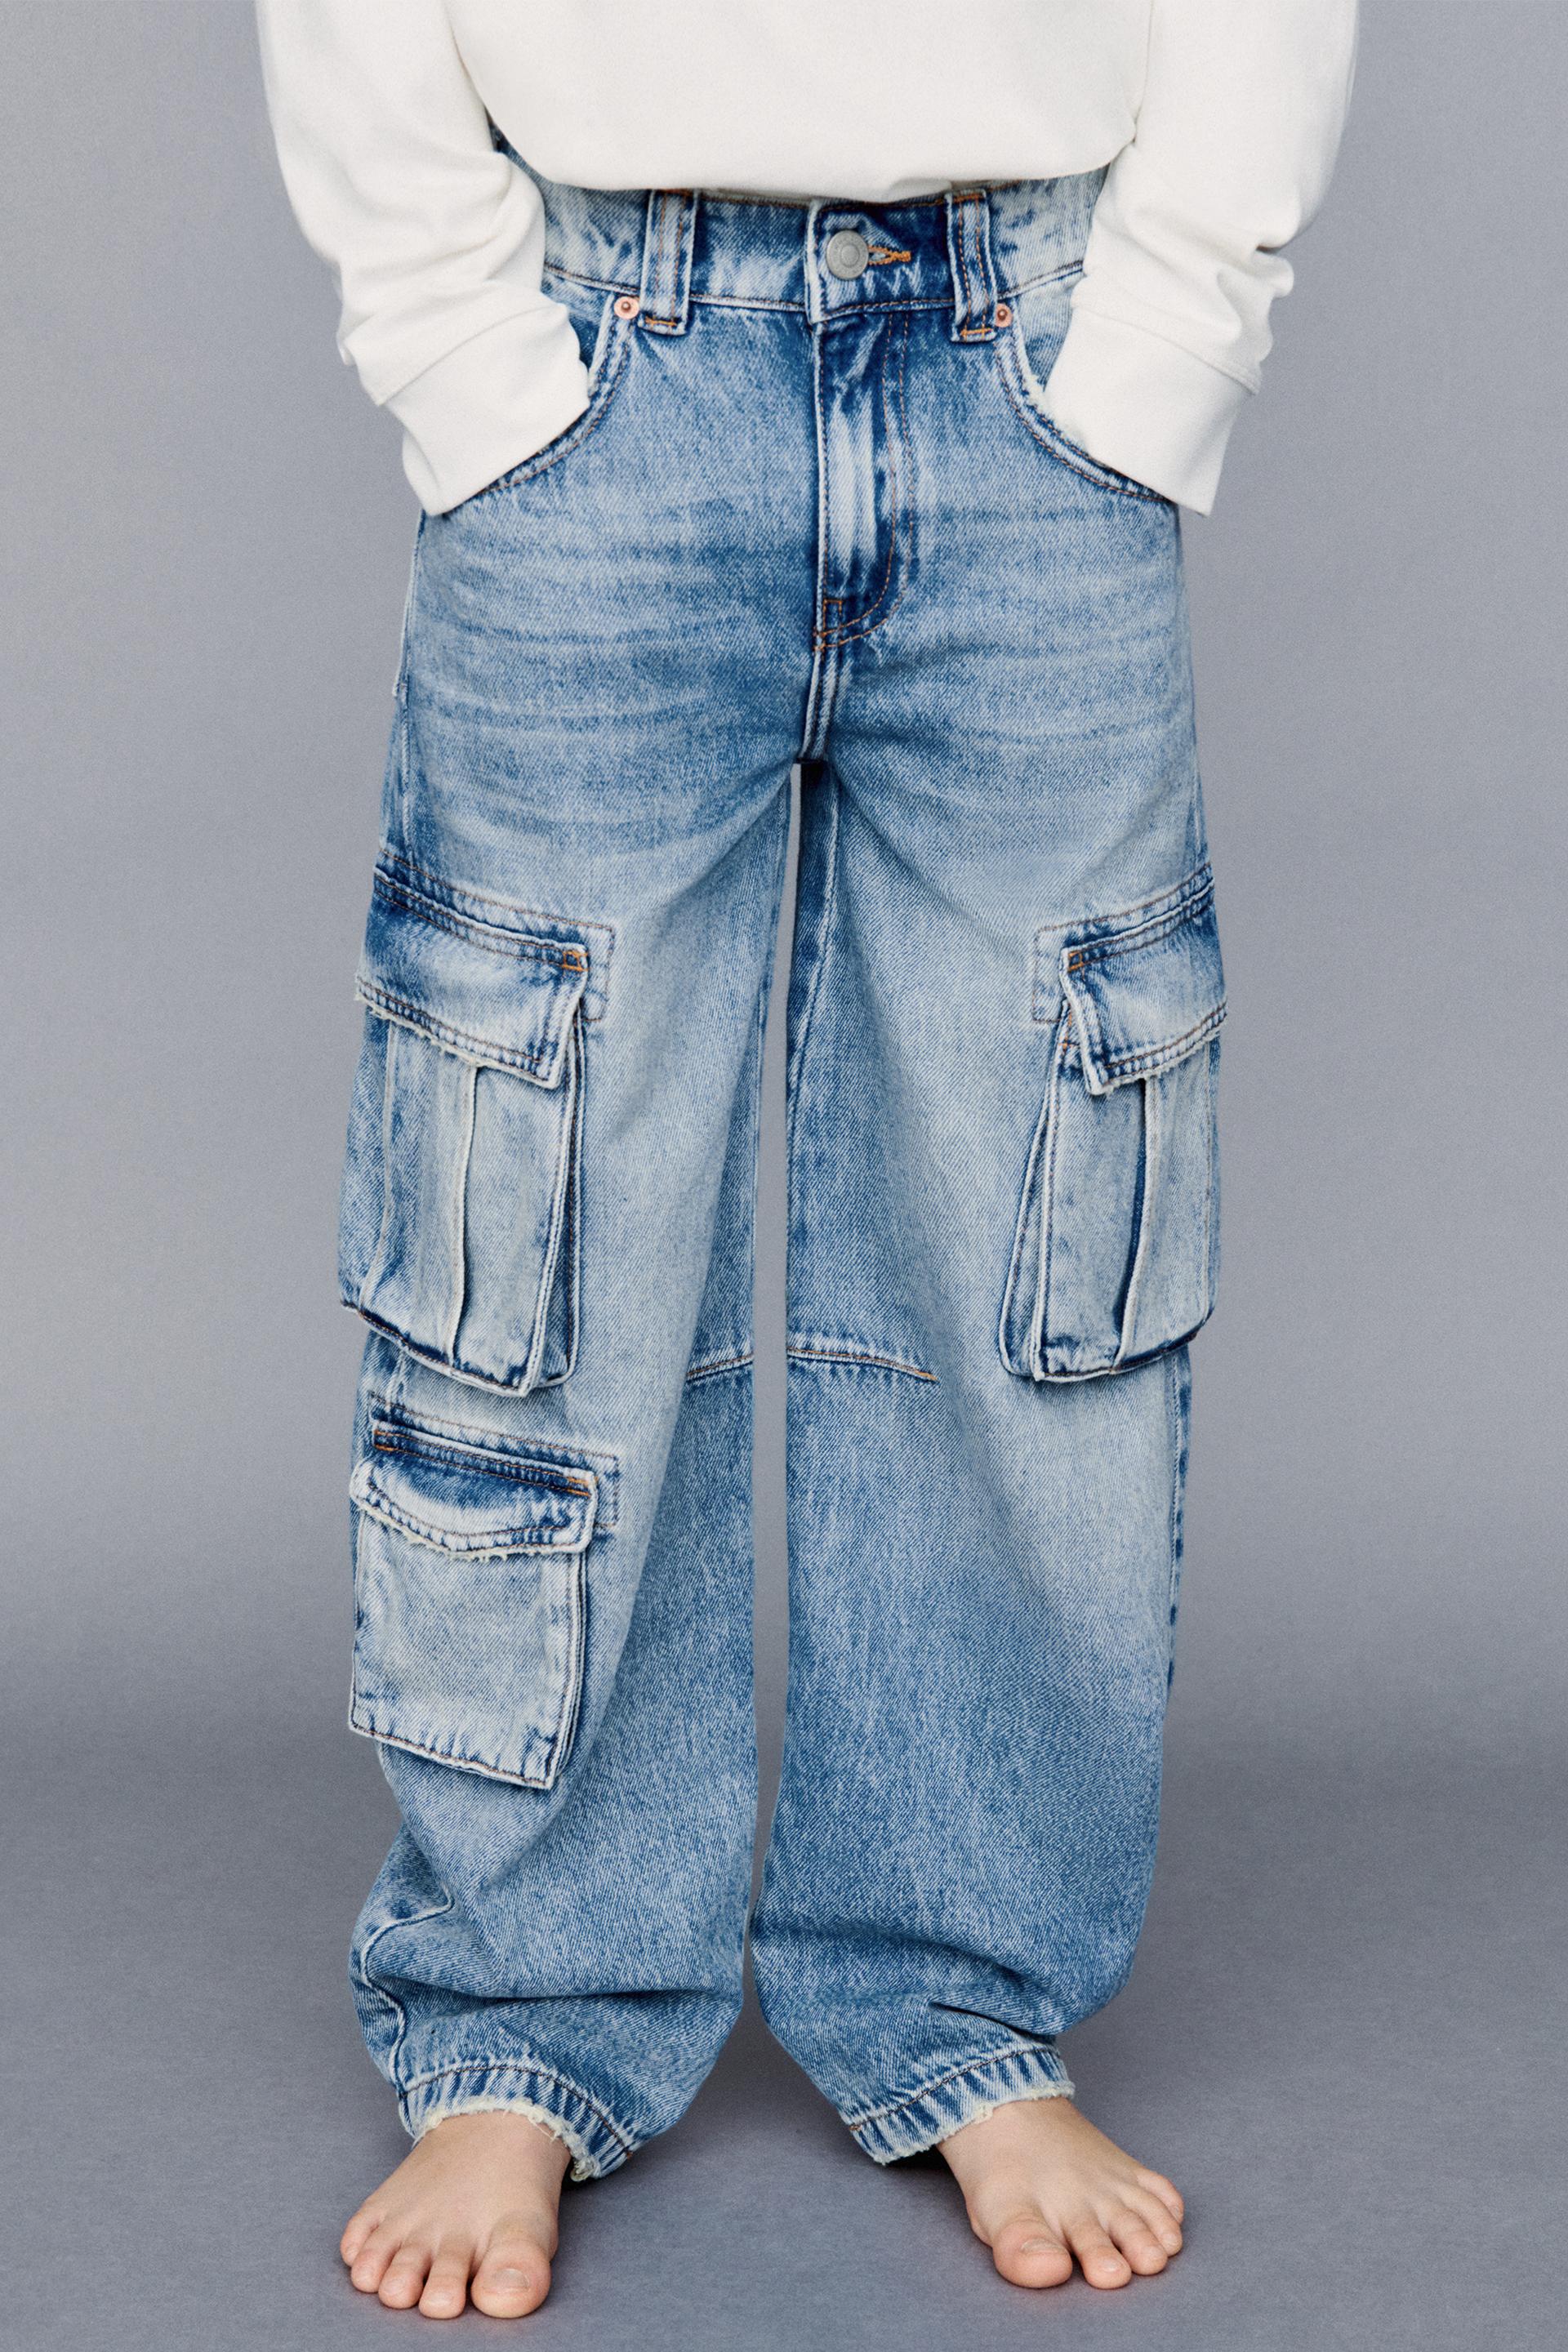 Trying on the viral Zara Cargo Jeans #zara #zarajeans #cargojeans, Zara  Cargo Pants